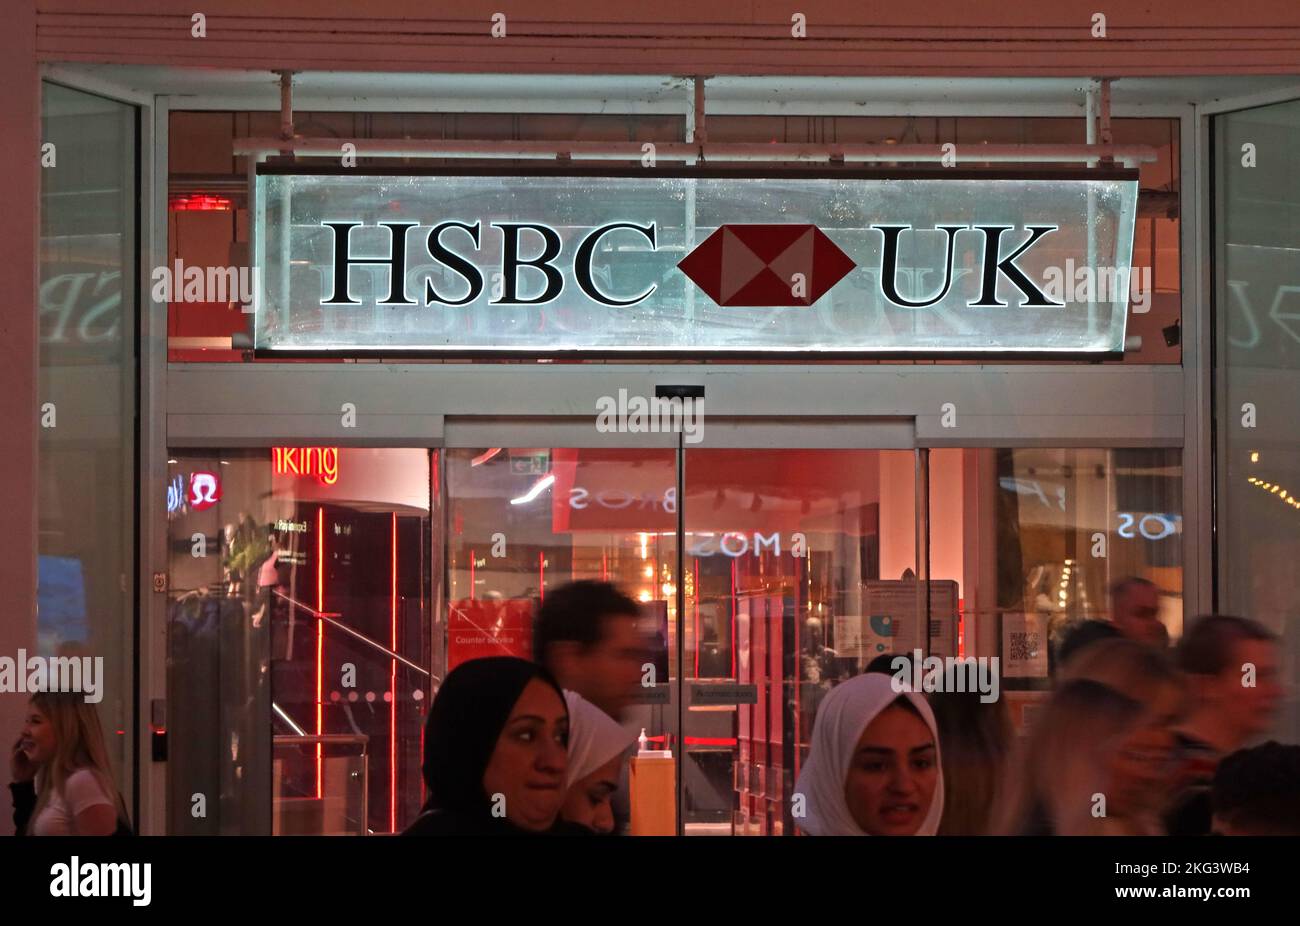 HSBC – Hong Kong Shanghai Banking Corporation, UK-Zweigstelle, 2-4 St Anns Square, Manchester, England, Großbritannien, m2 7HD bei Nacht Stockfoto